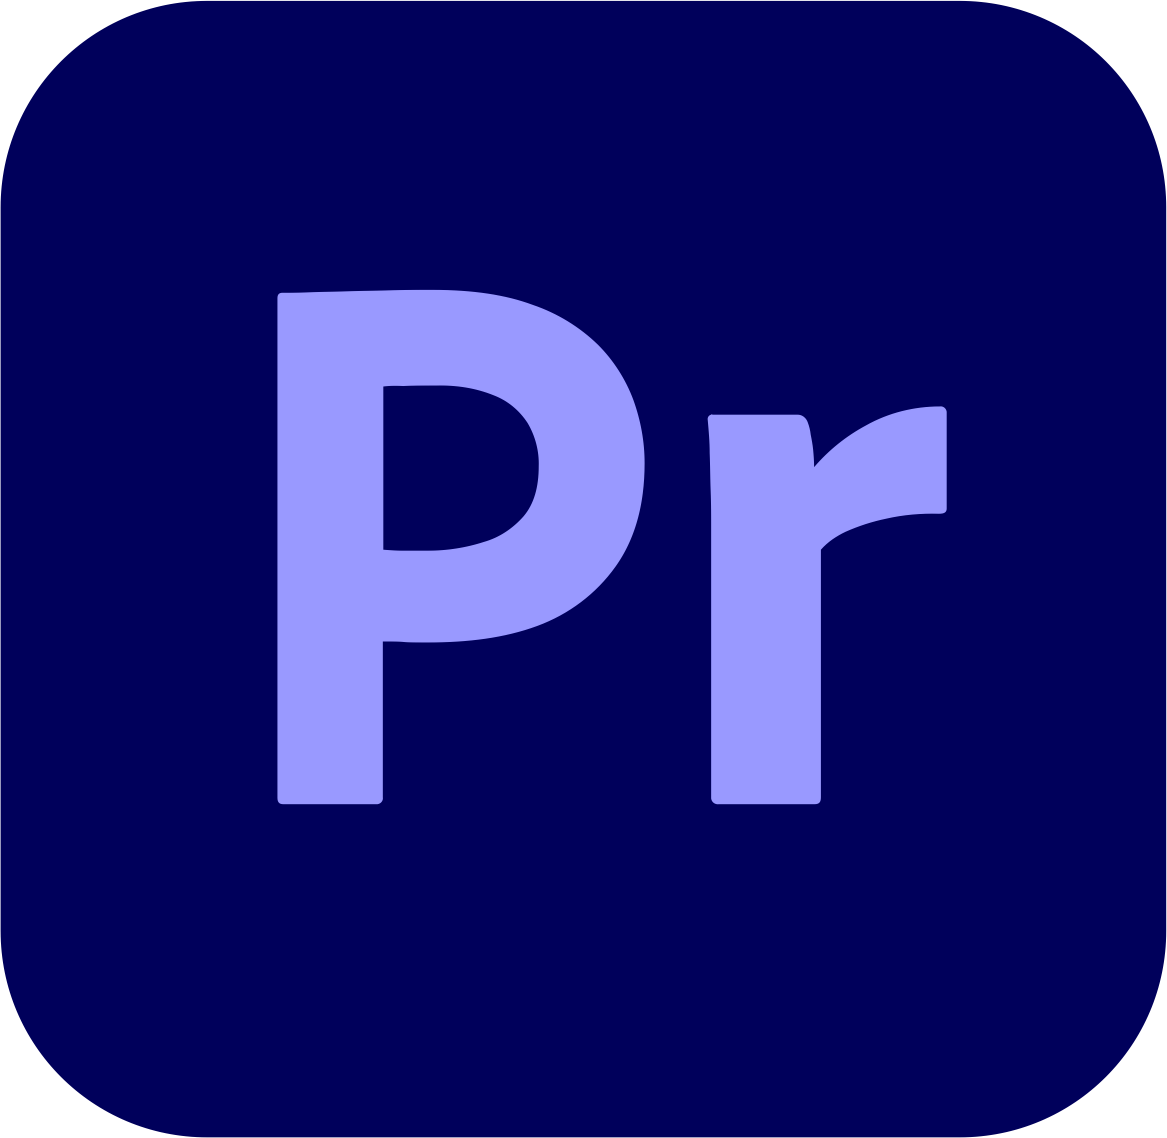 Adobe Premiere Logo PNG Vector File Download - FREE Vector Design - Cdr ...